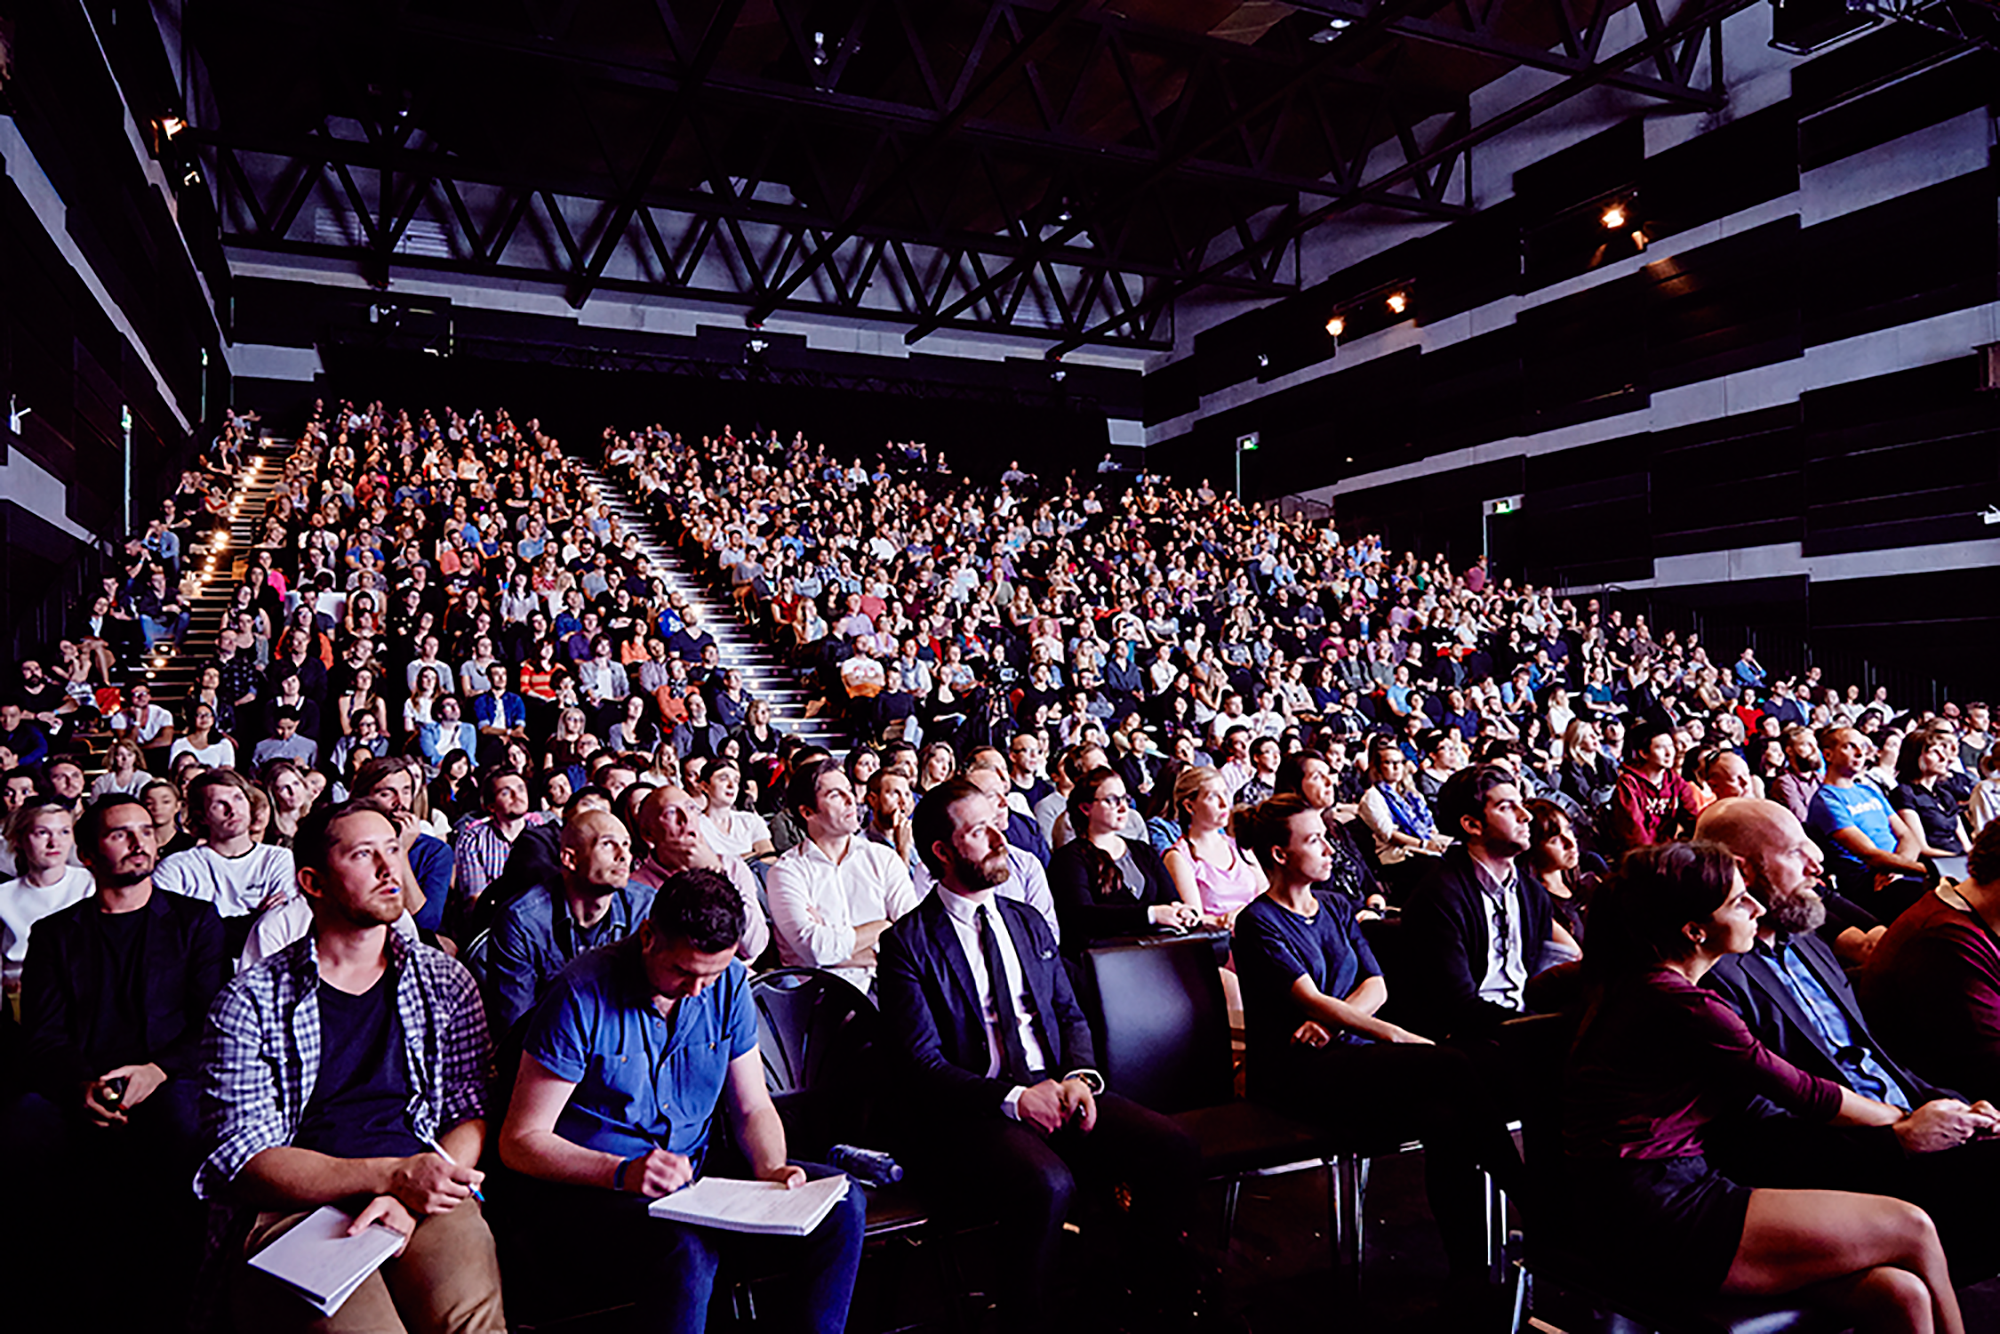 Good audience. Публика толпа аудитория. Музыкальная аудитория. Народ сцена лекция. Шумная аудитория.